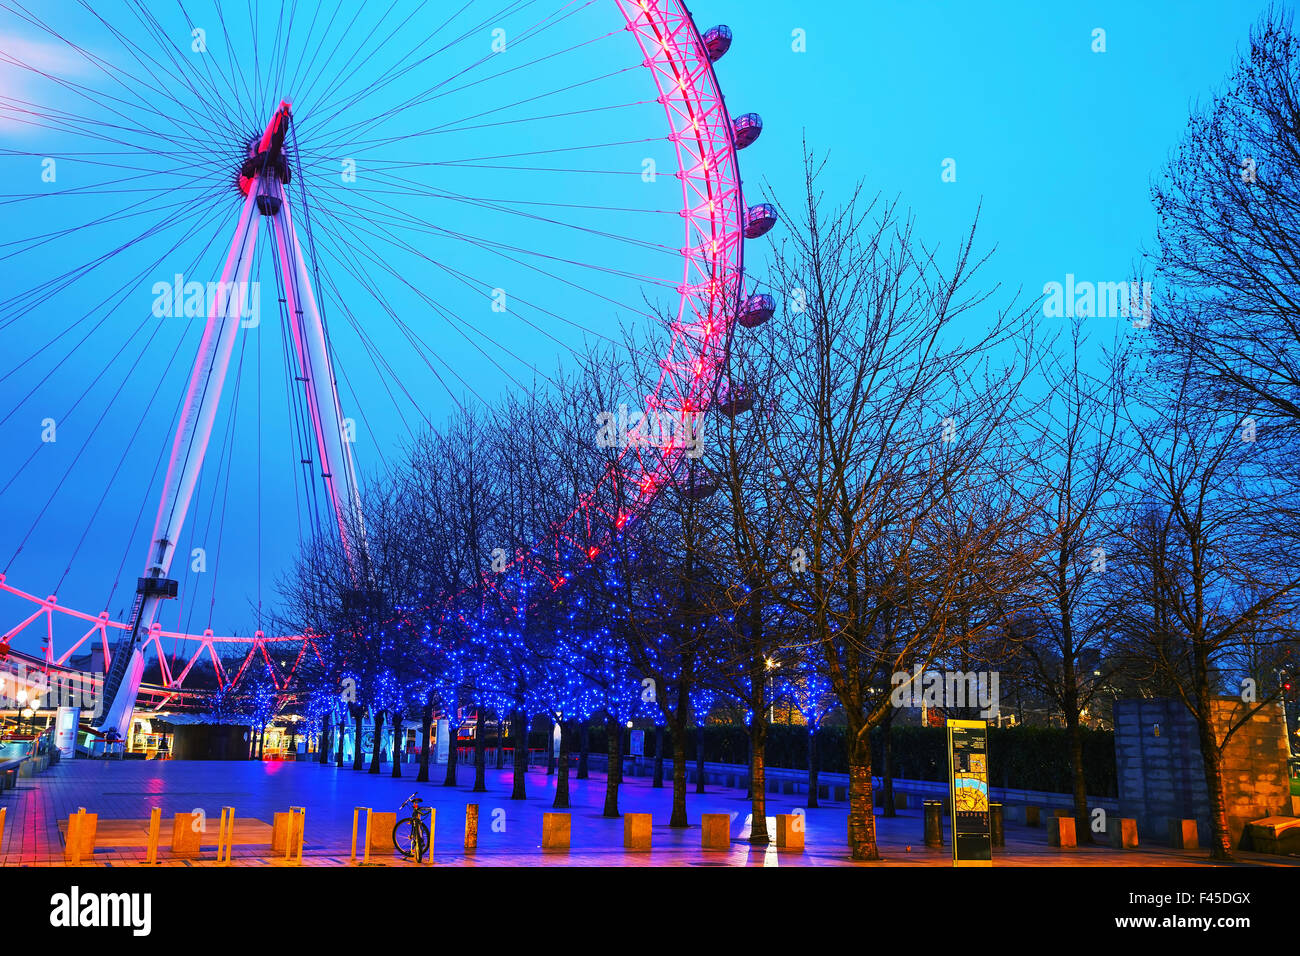 The London Eye Ferris wheel in the evening Stock Photo